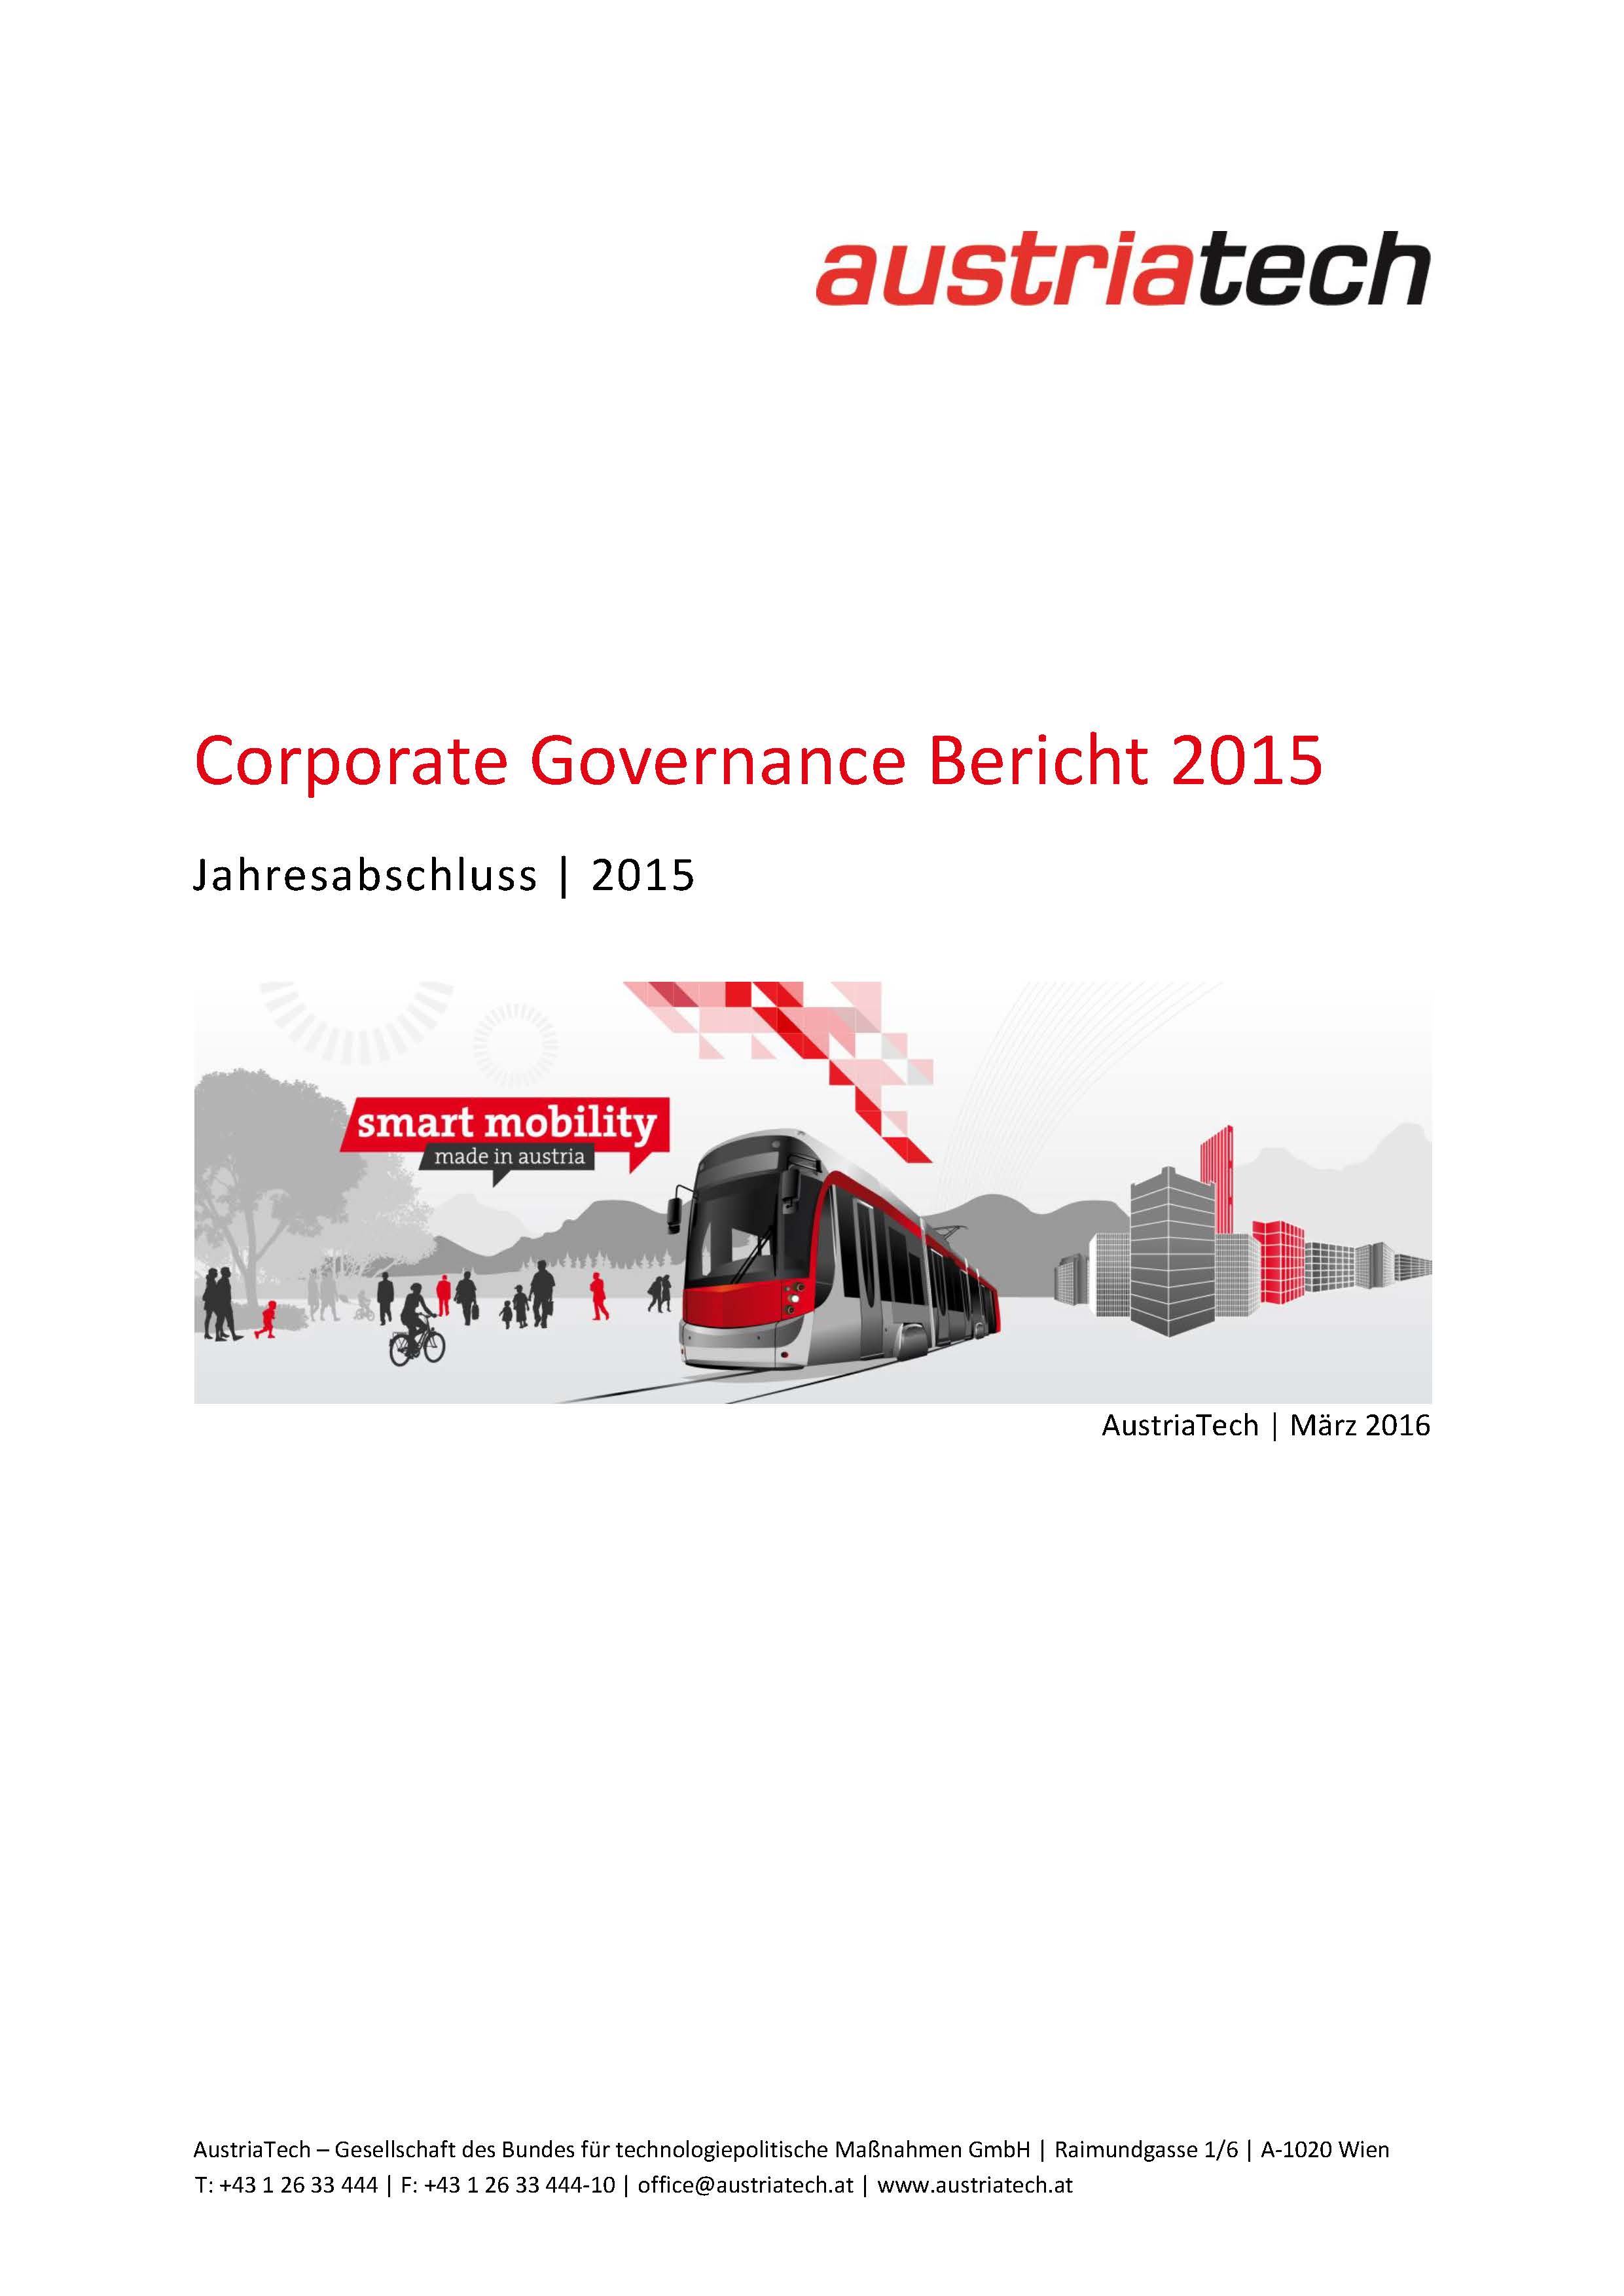 AustriaTech Corporate Governance 2015